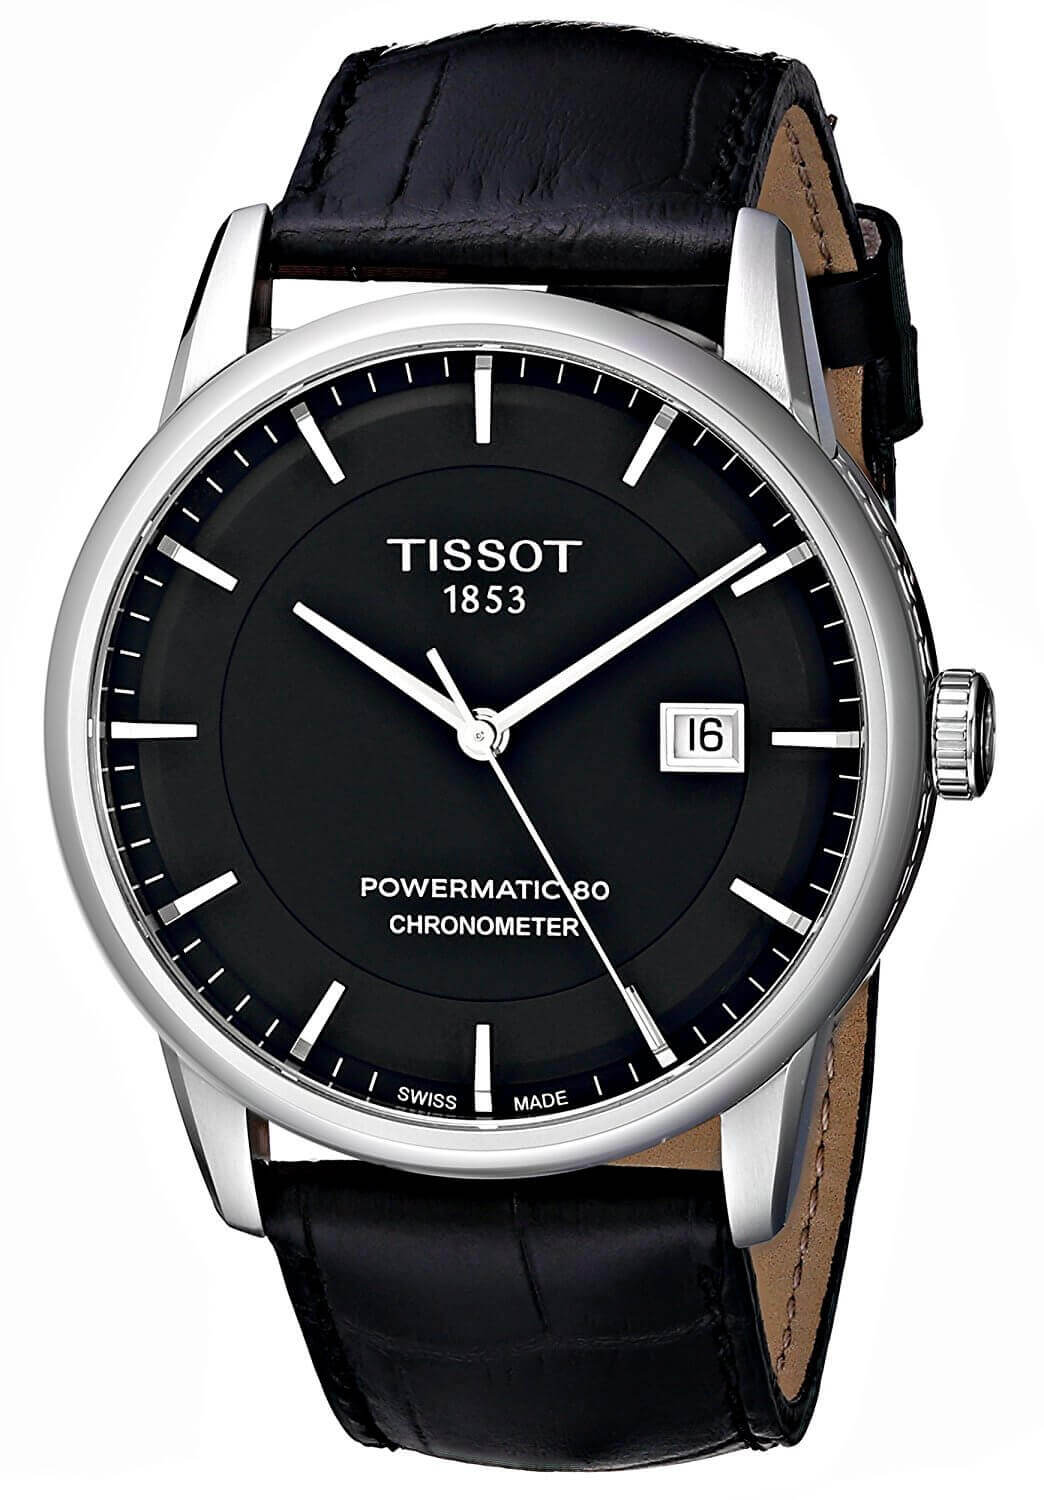 1. Tissot Powermatic80 Chronometer